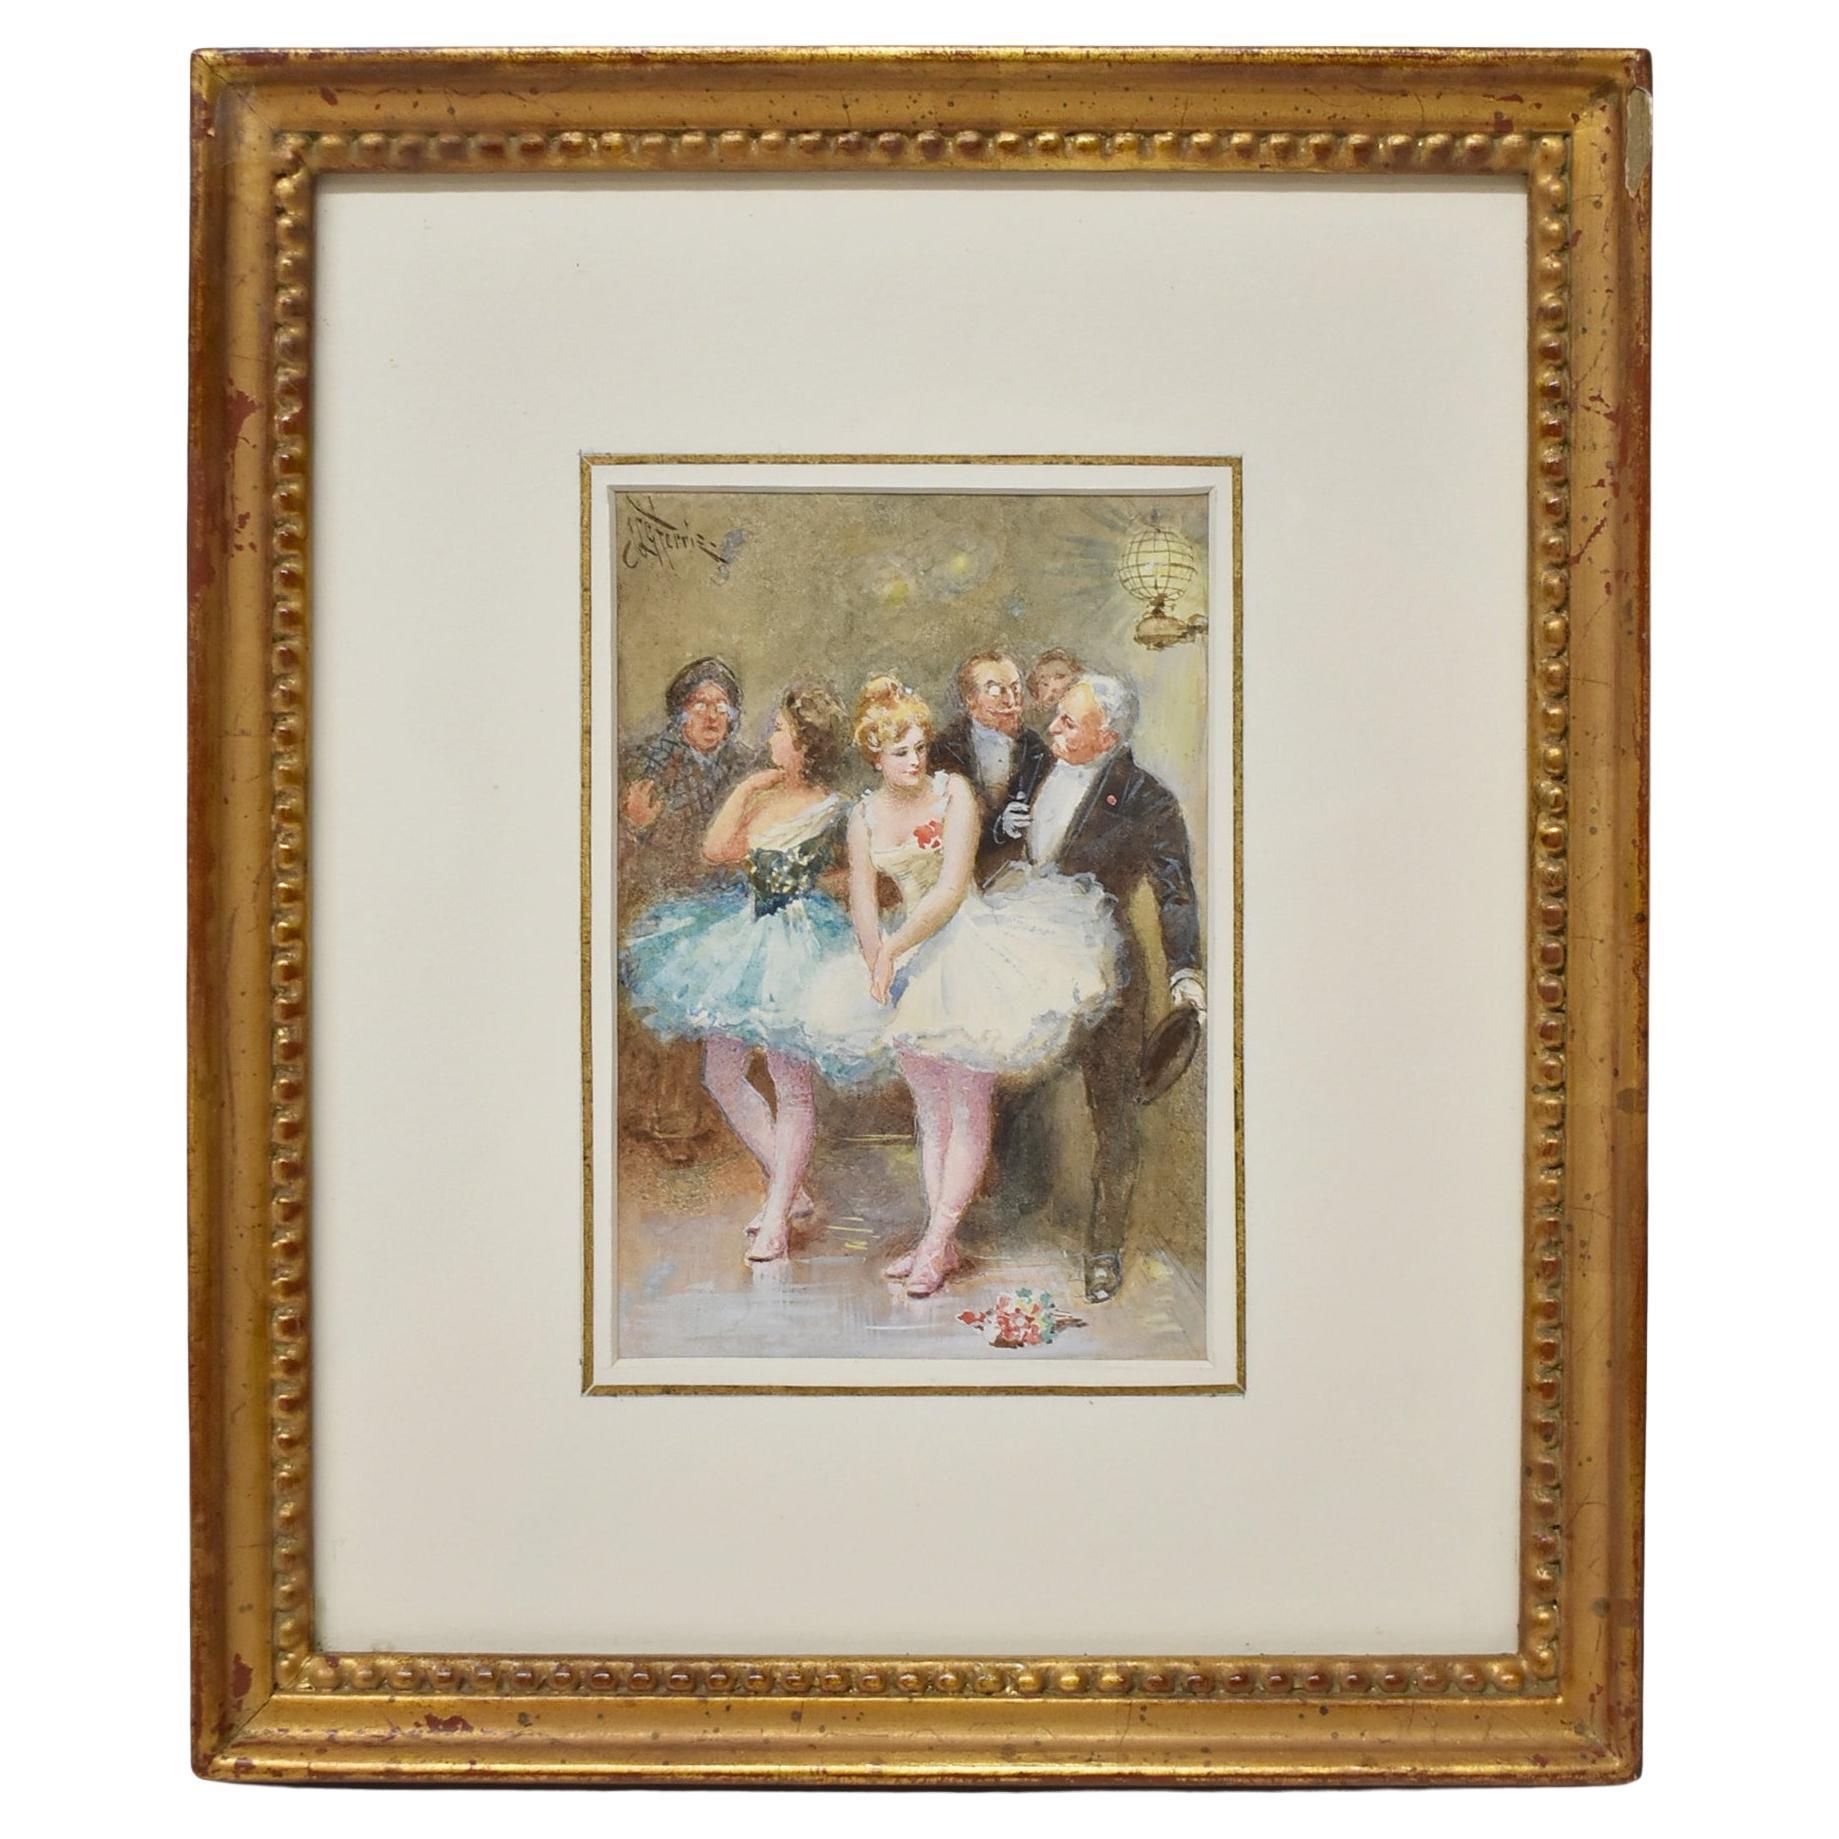 Jean Leon Gerome Ferris Framed Watercolor Painting, Ballerinas with Gentlemen